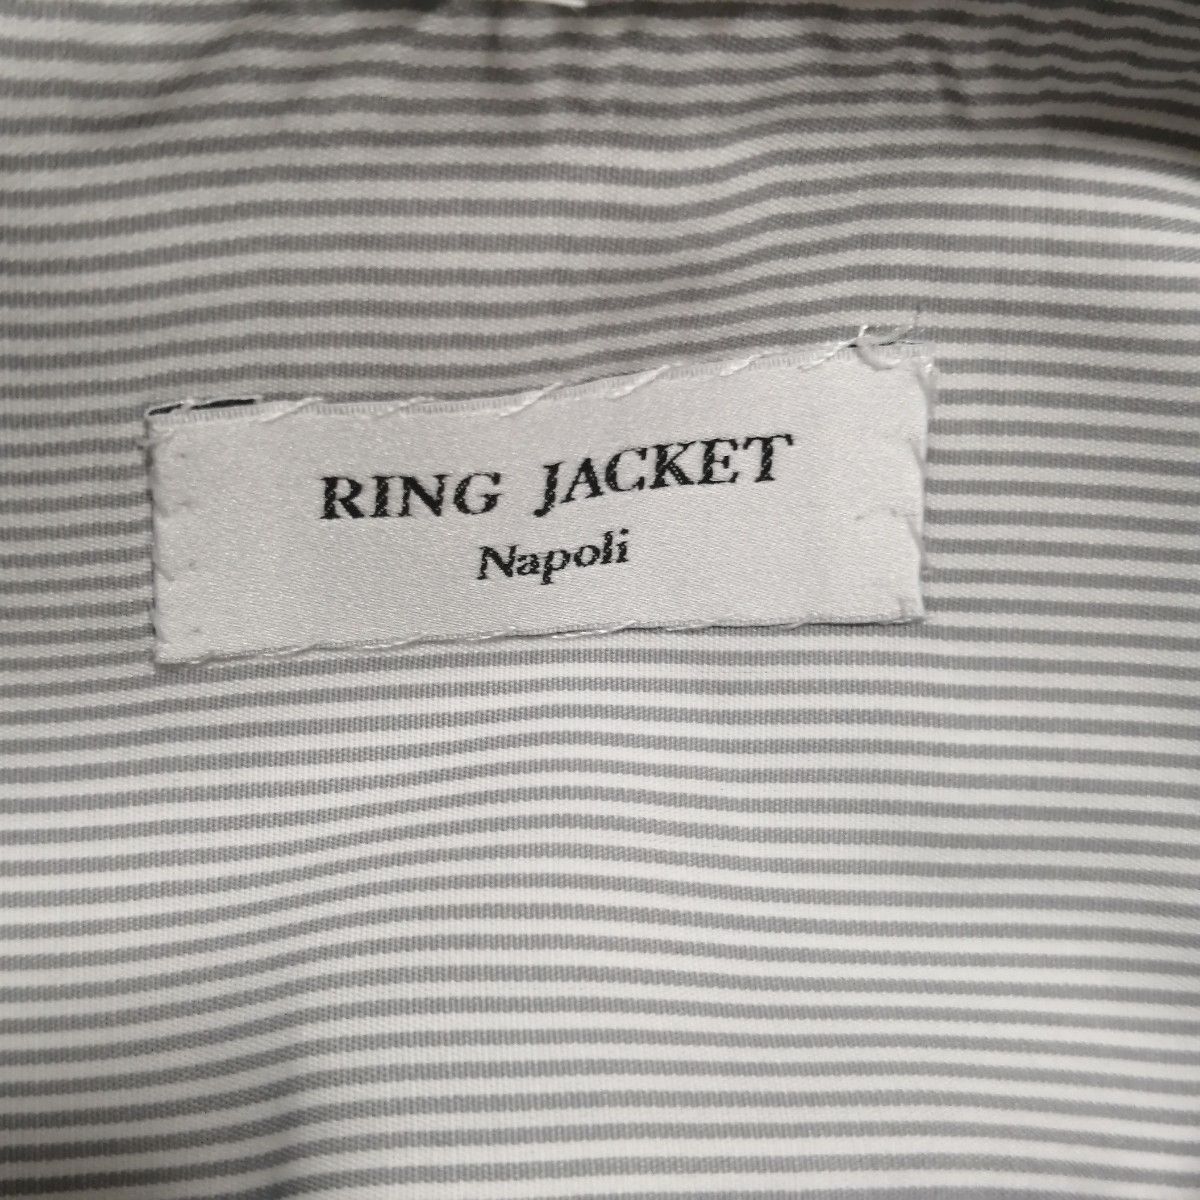 RING JACKET Napoli リングヂャケット ハンドメイド 16-41